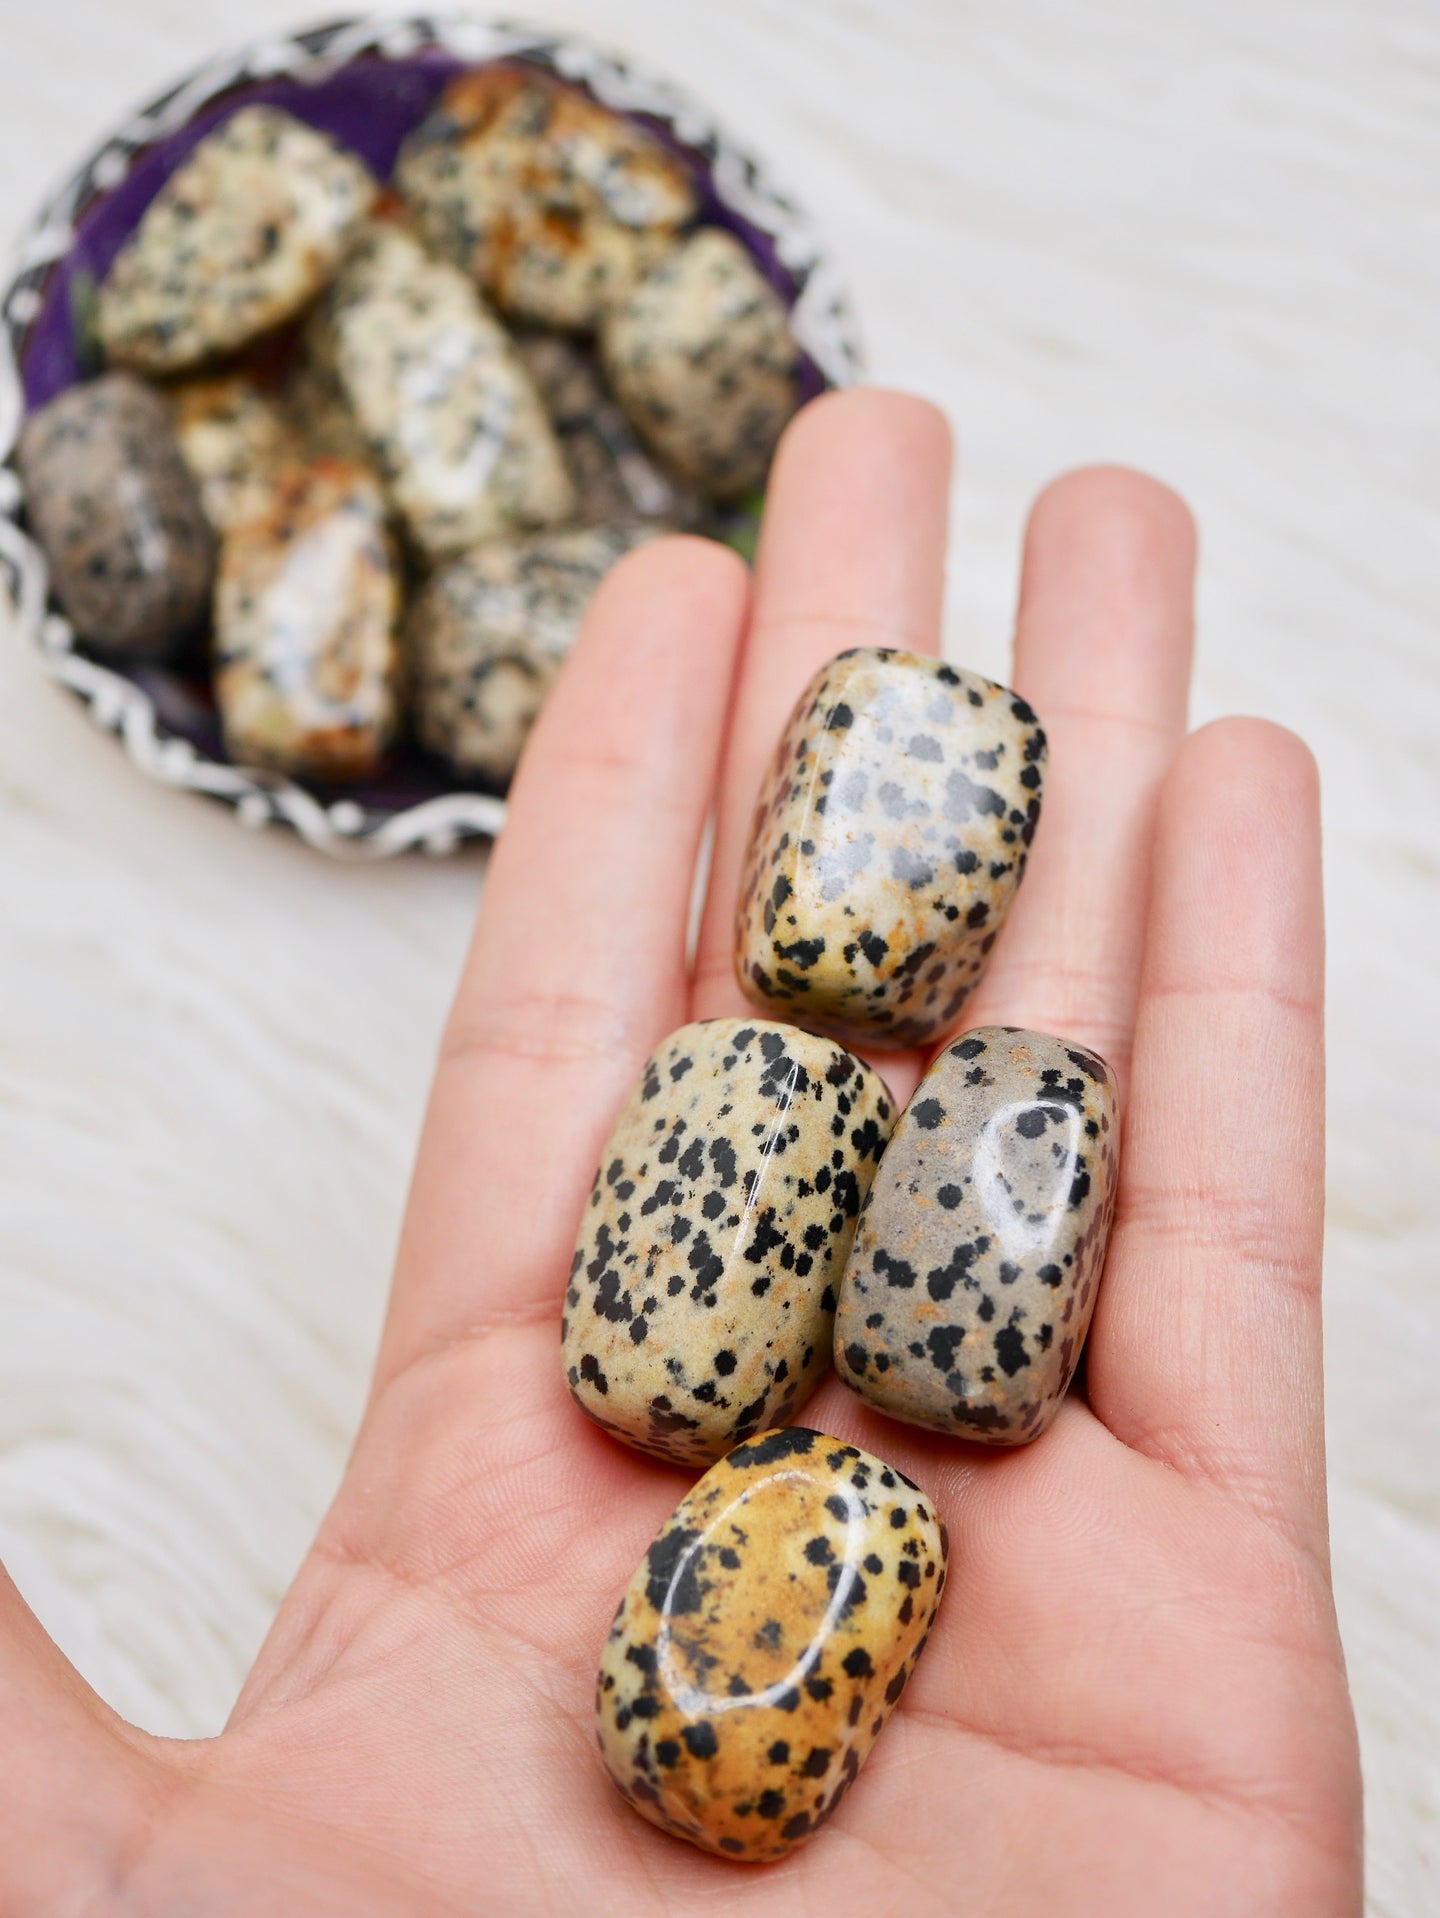 Dalmatian jasper tumbled stones